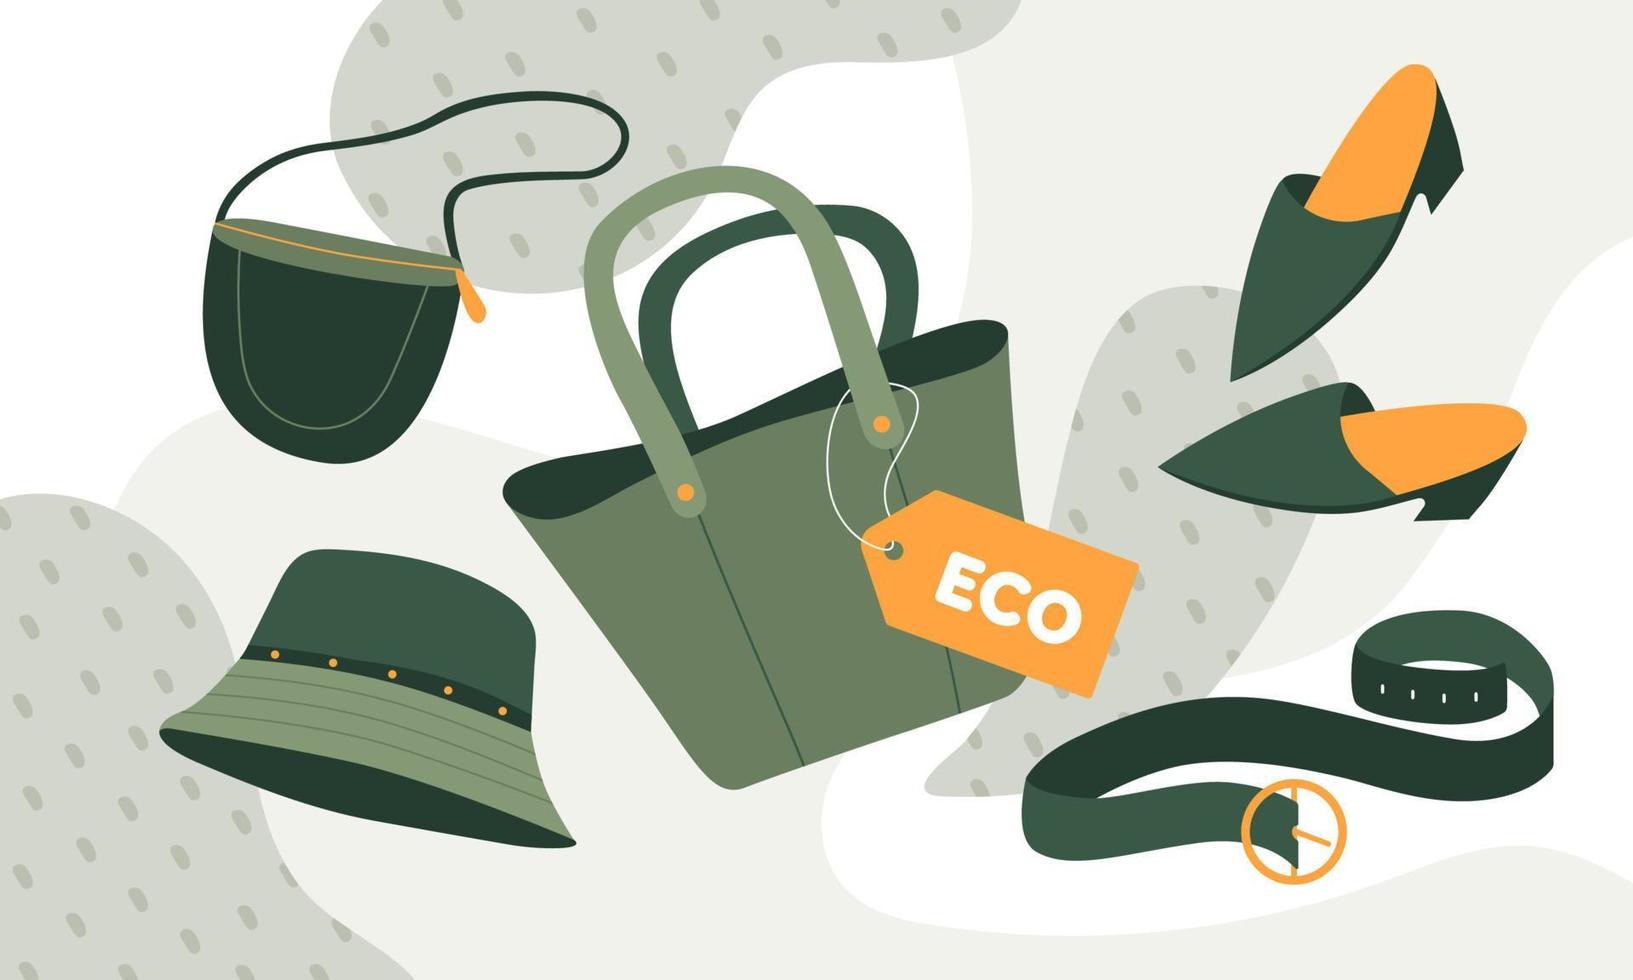 Green eco fabric accessories with orange tag.Cactus eco-leather concept. Vector illustratio